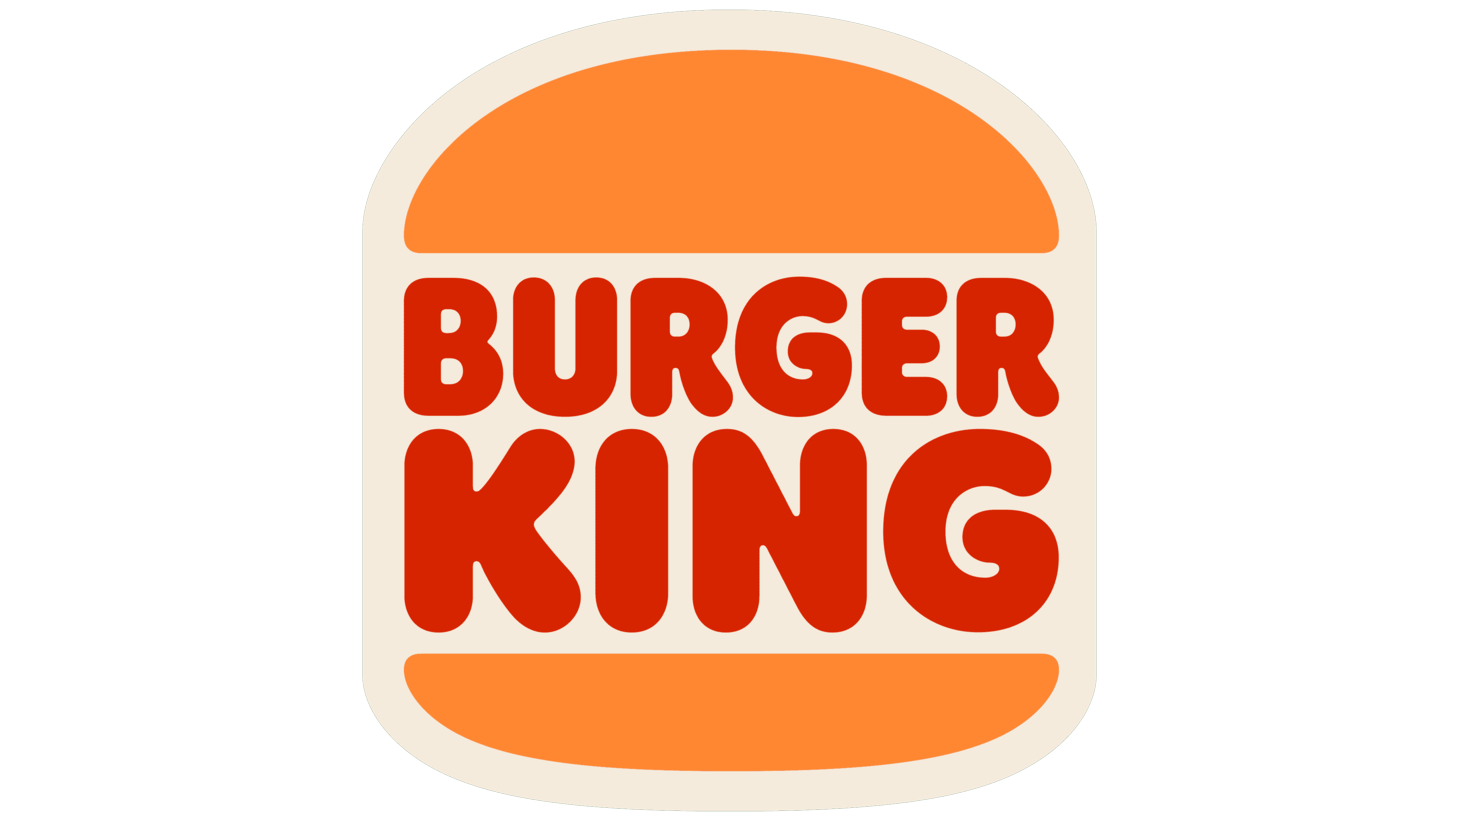 Burger king sign